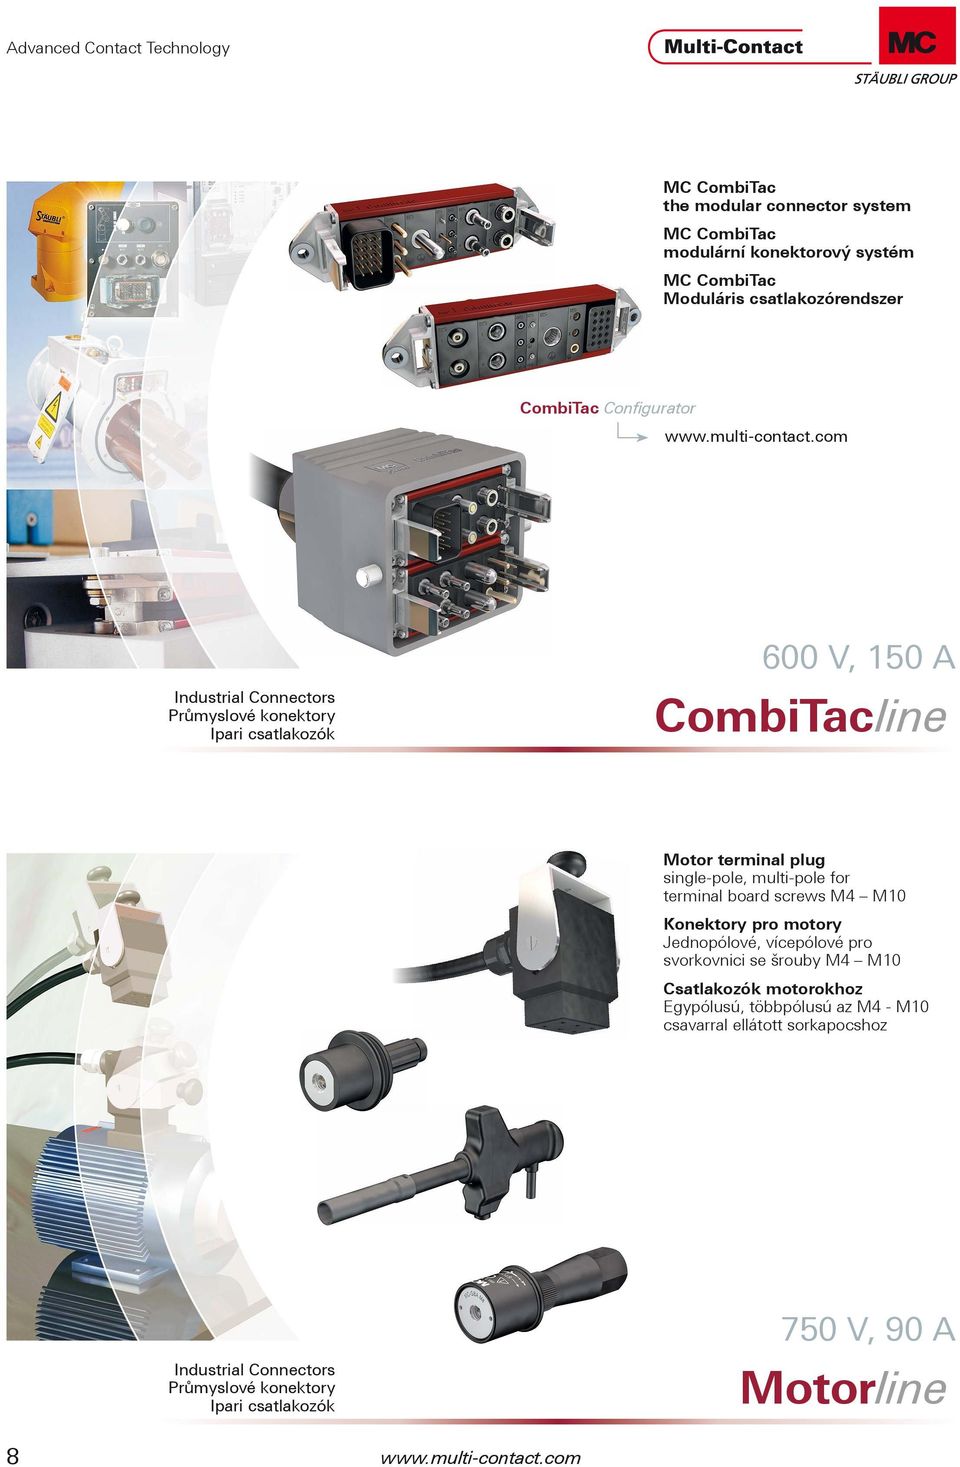 com 600 V, 150 A CombiTacline Motor terminal plug single-pole, multi-pole for terminal board screws M4 M10 Konektory pro